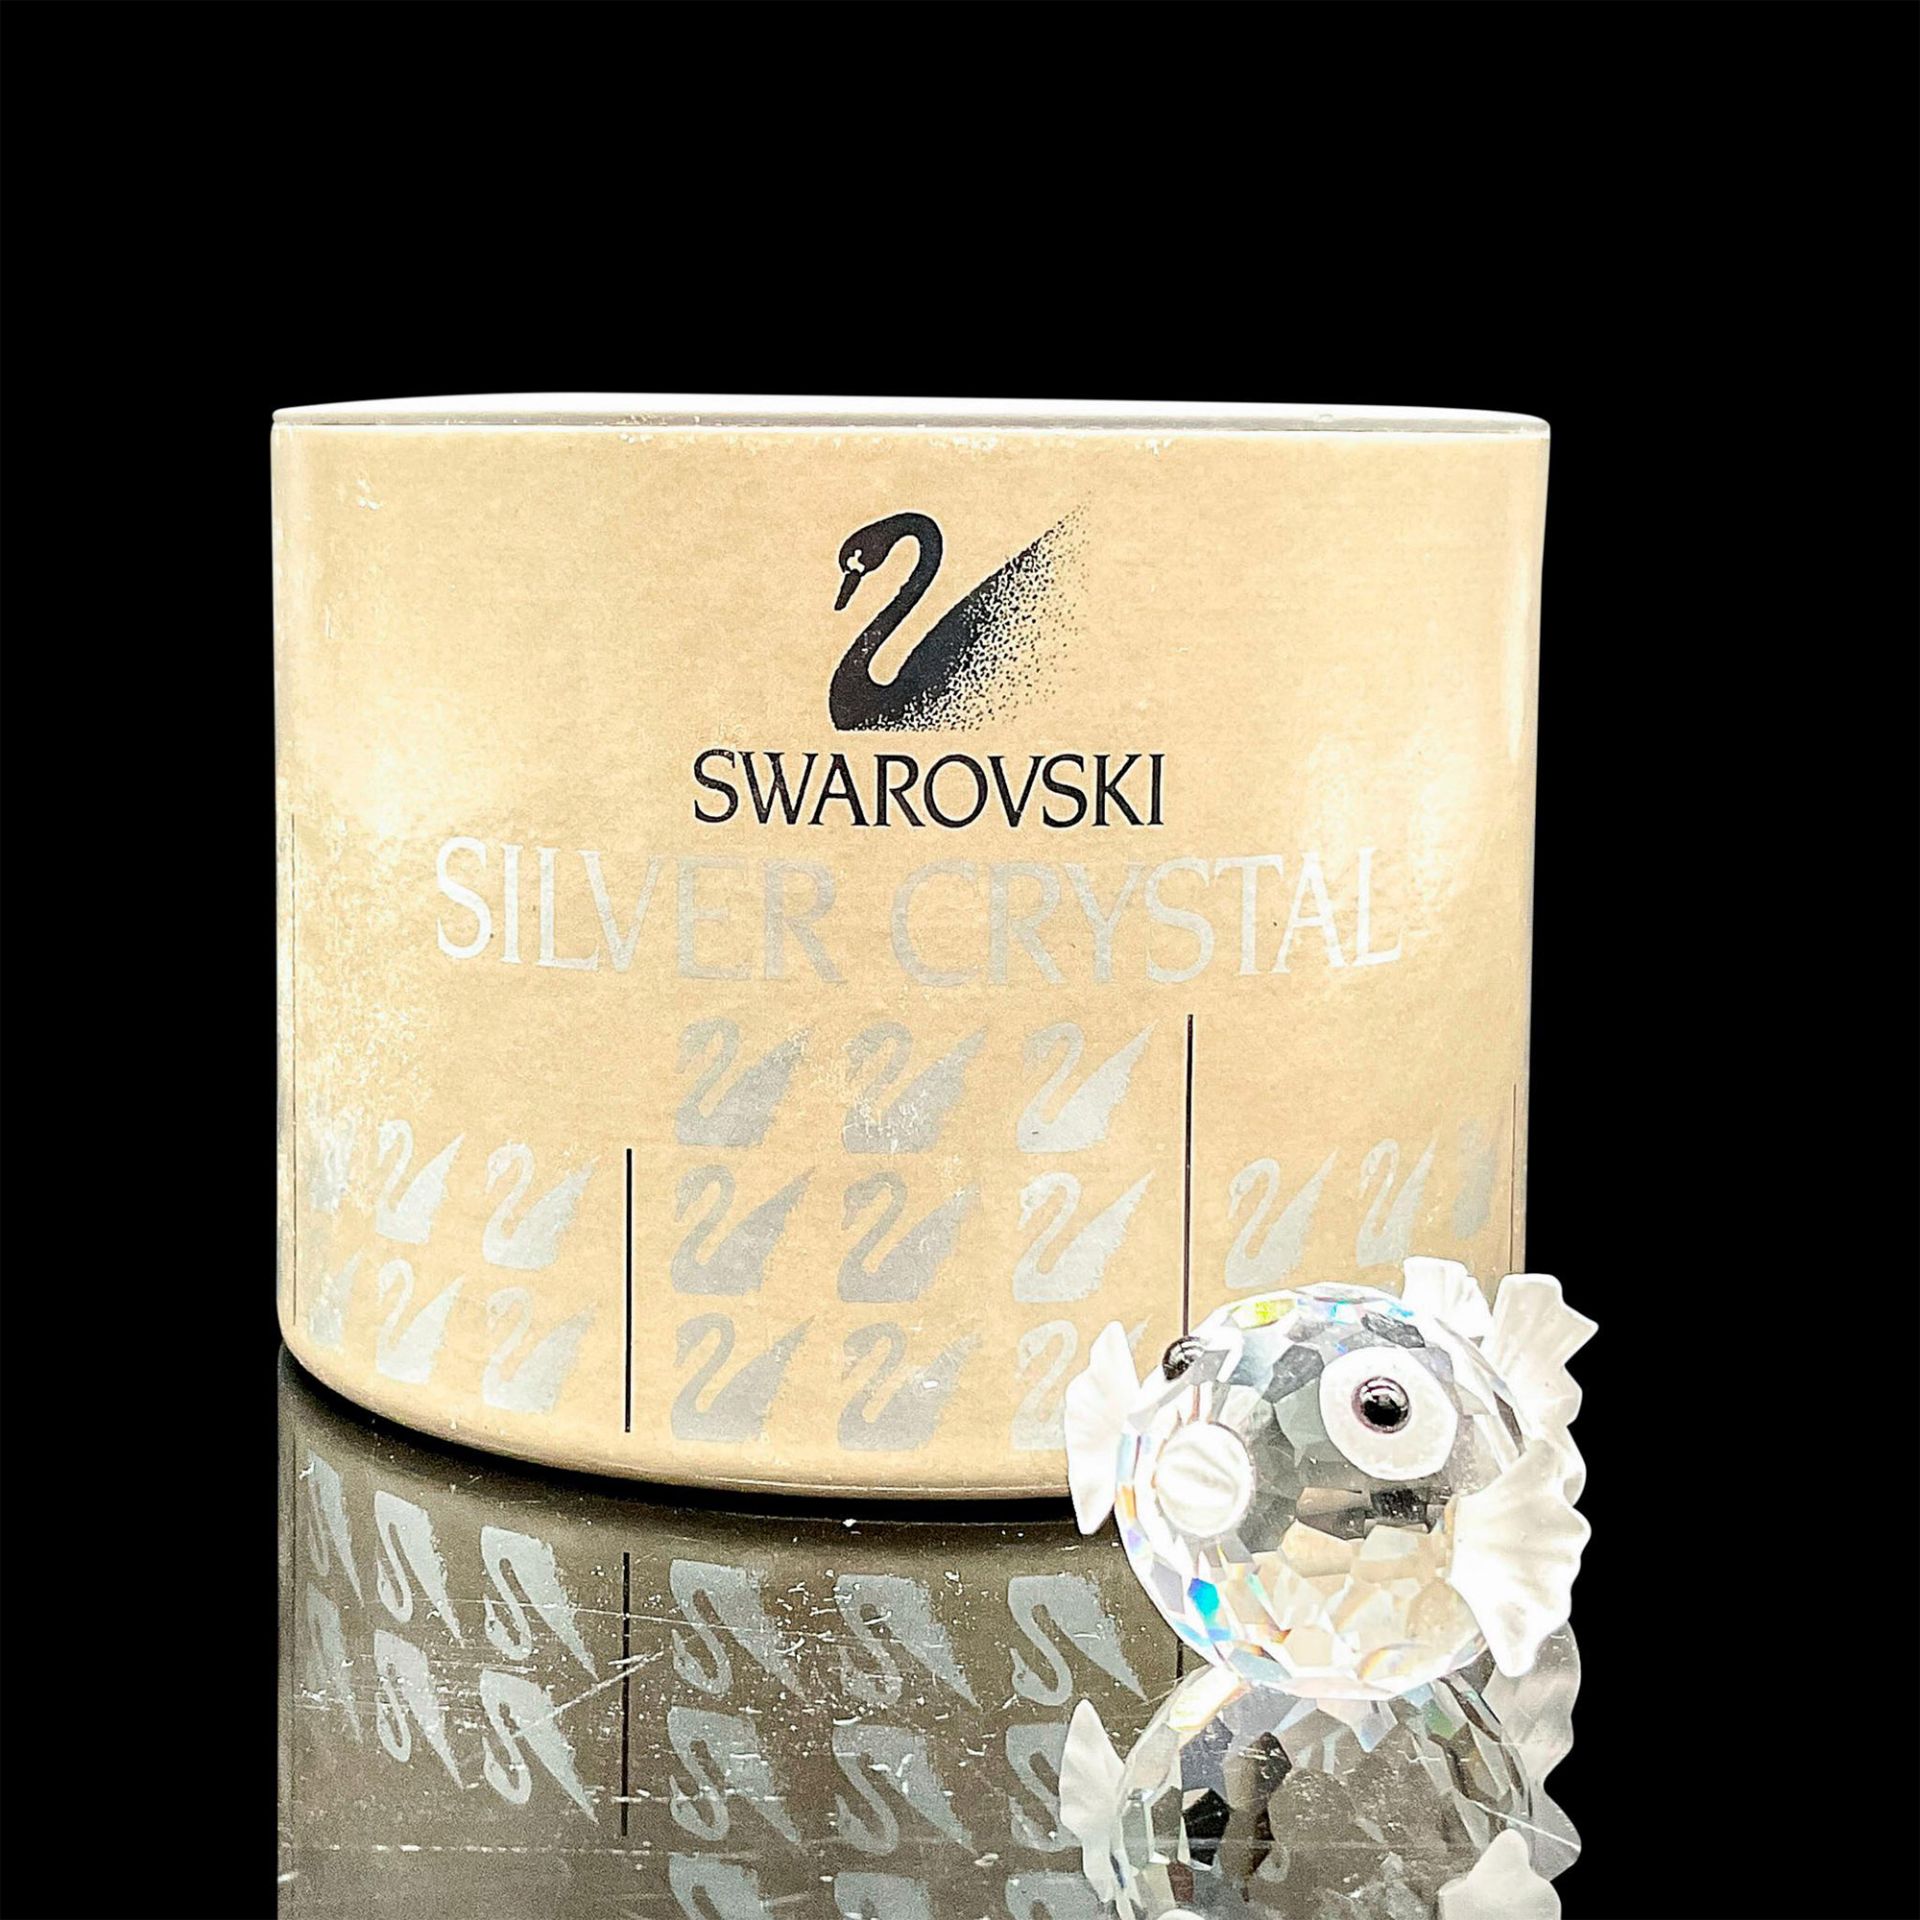 Swarovski Silver Crystal Figurine, Mini Blowfish - Image 2 of 4